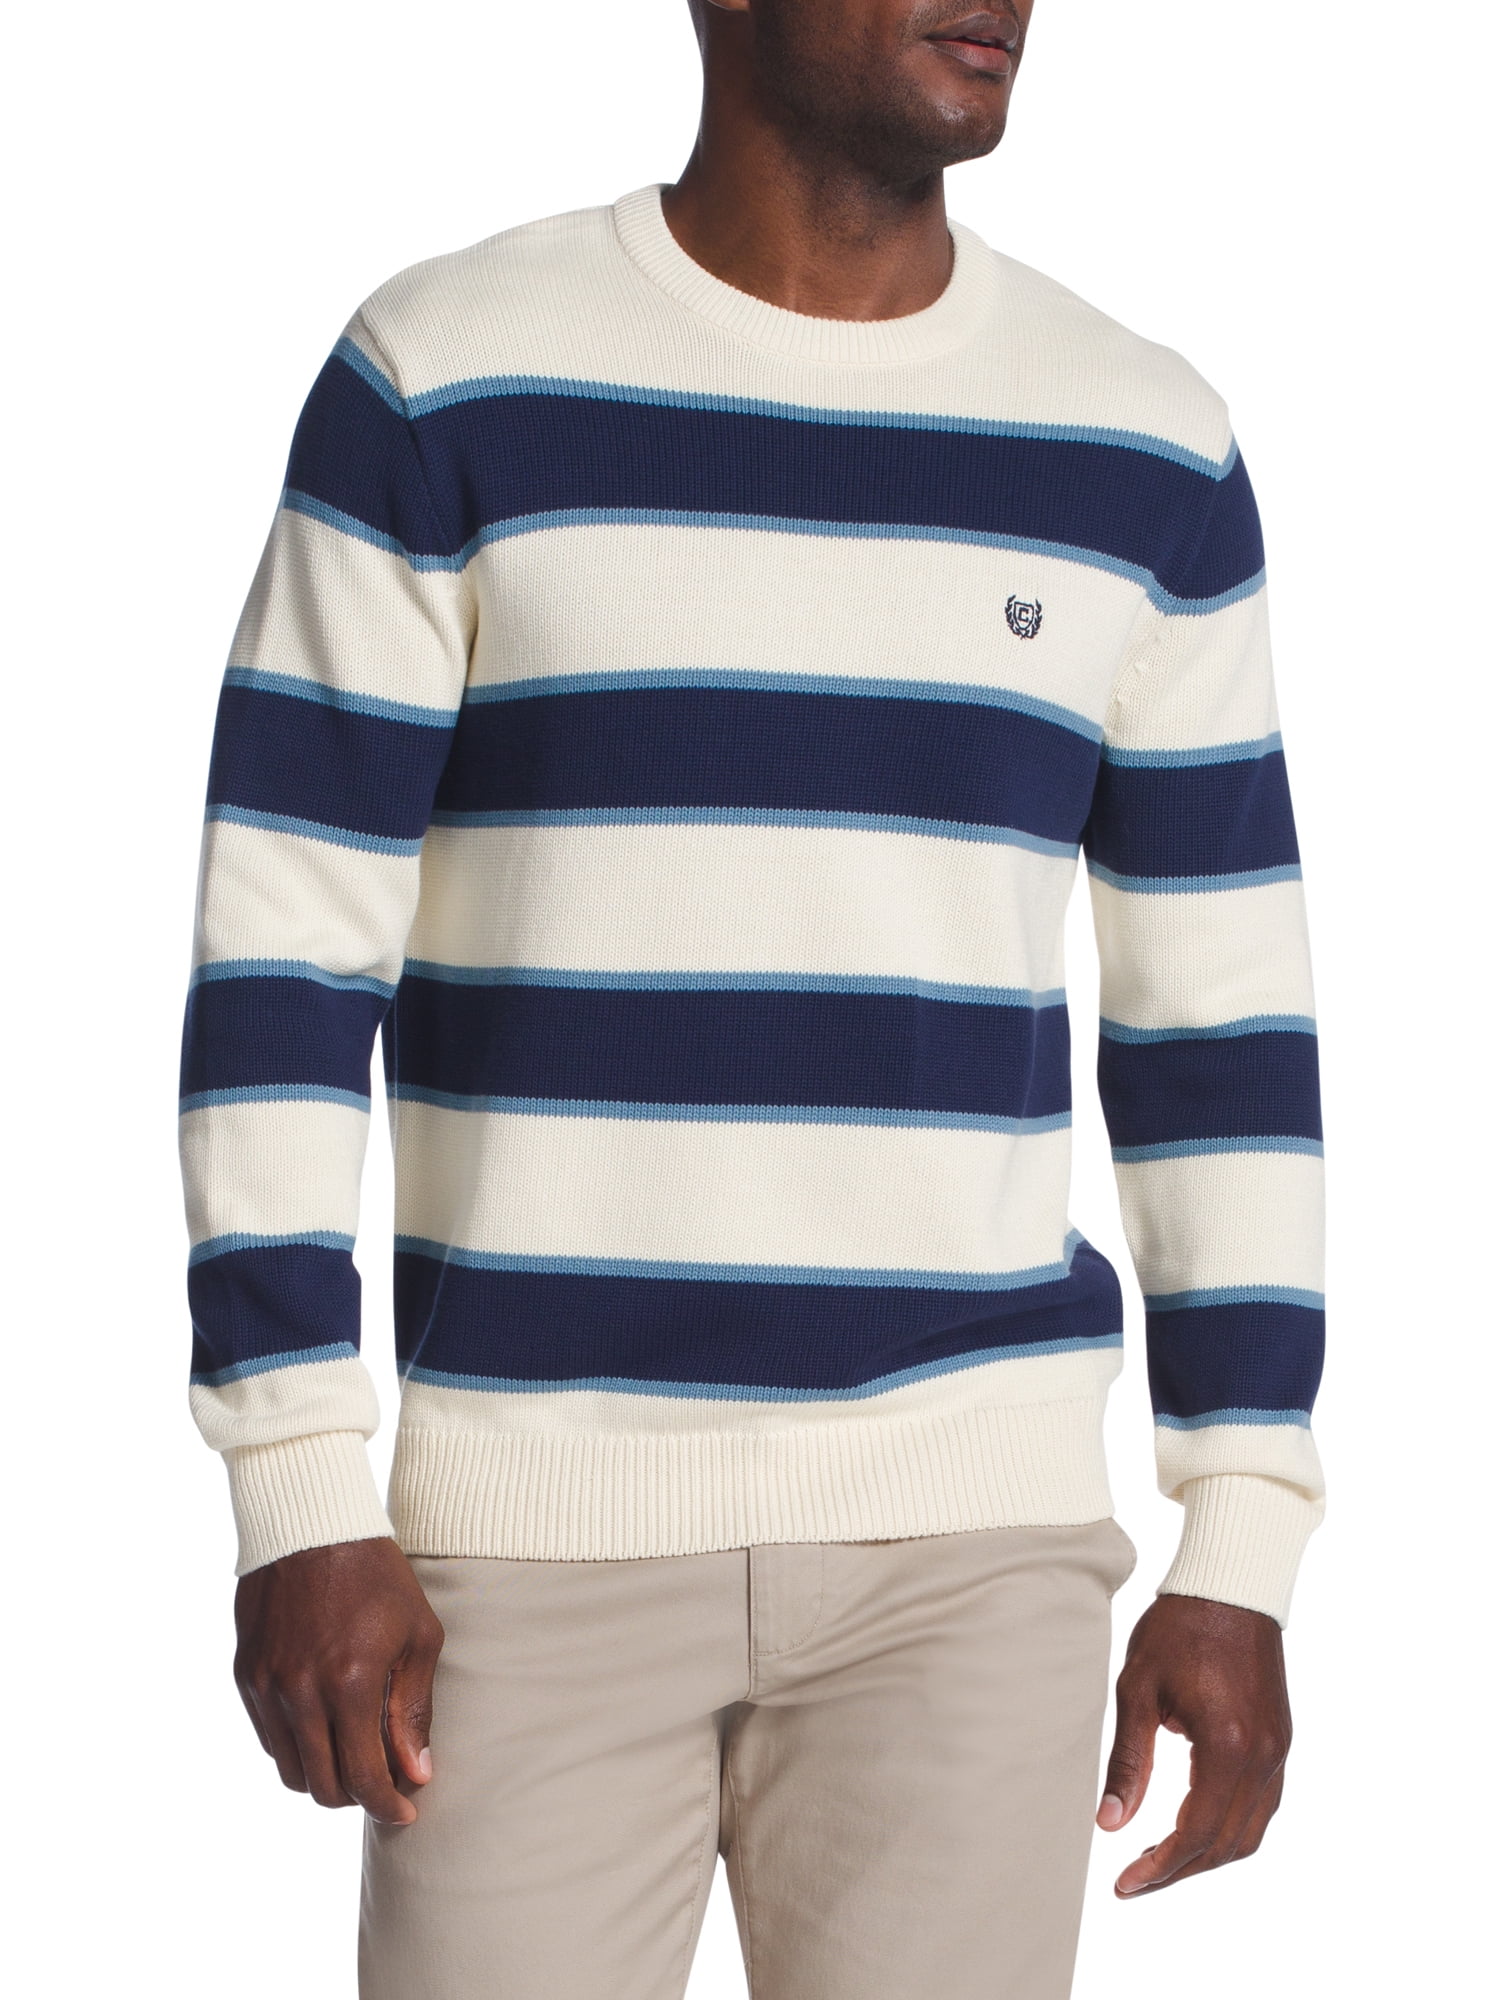 Mens Chaps L 100% Cotton Navy Blue w/ Stripes Winter Sweater NEW 